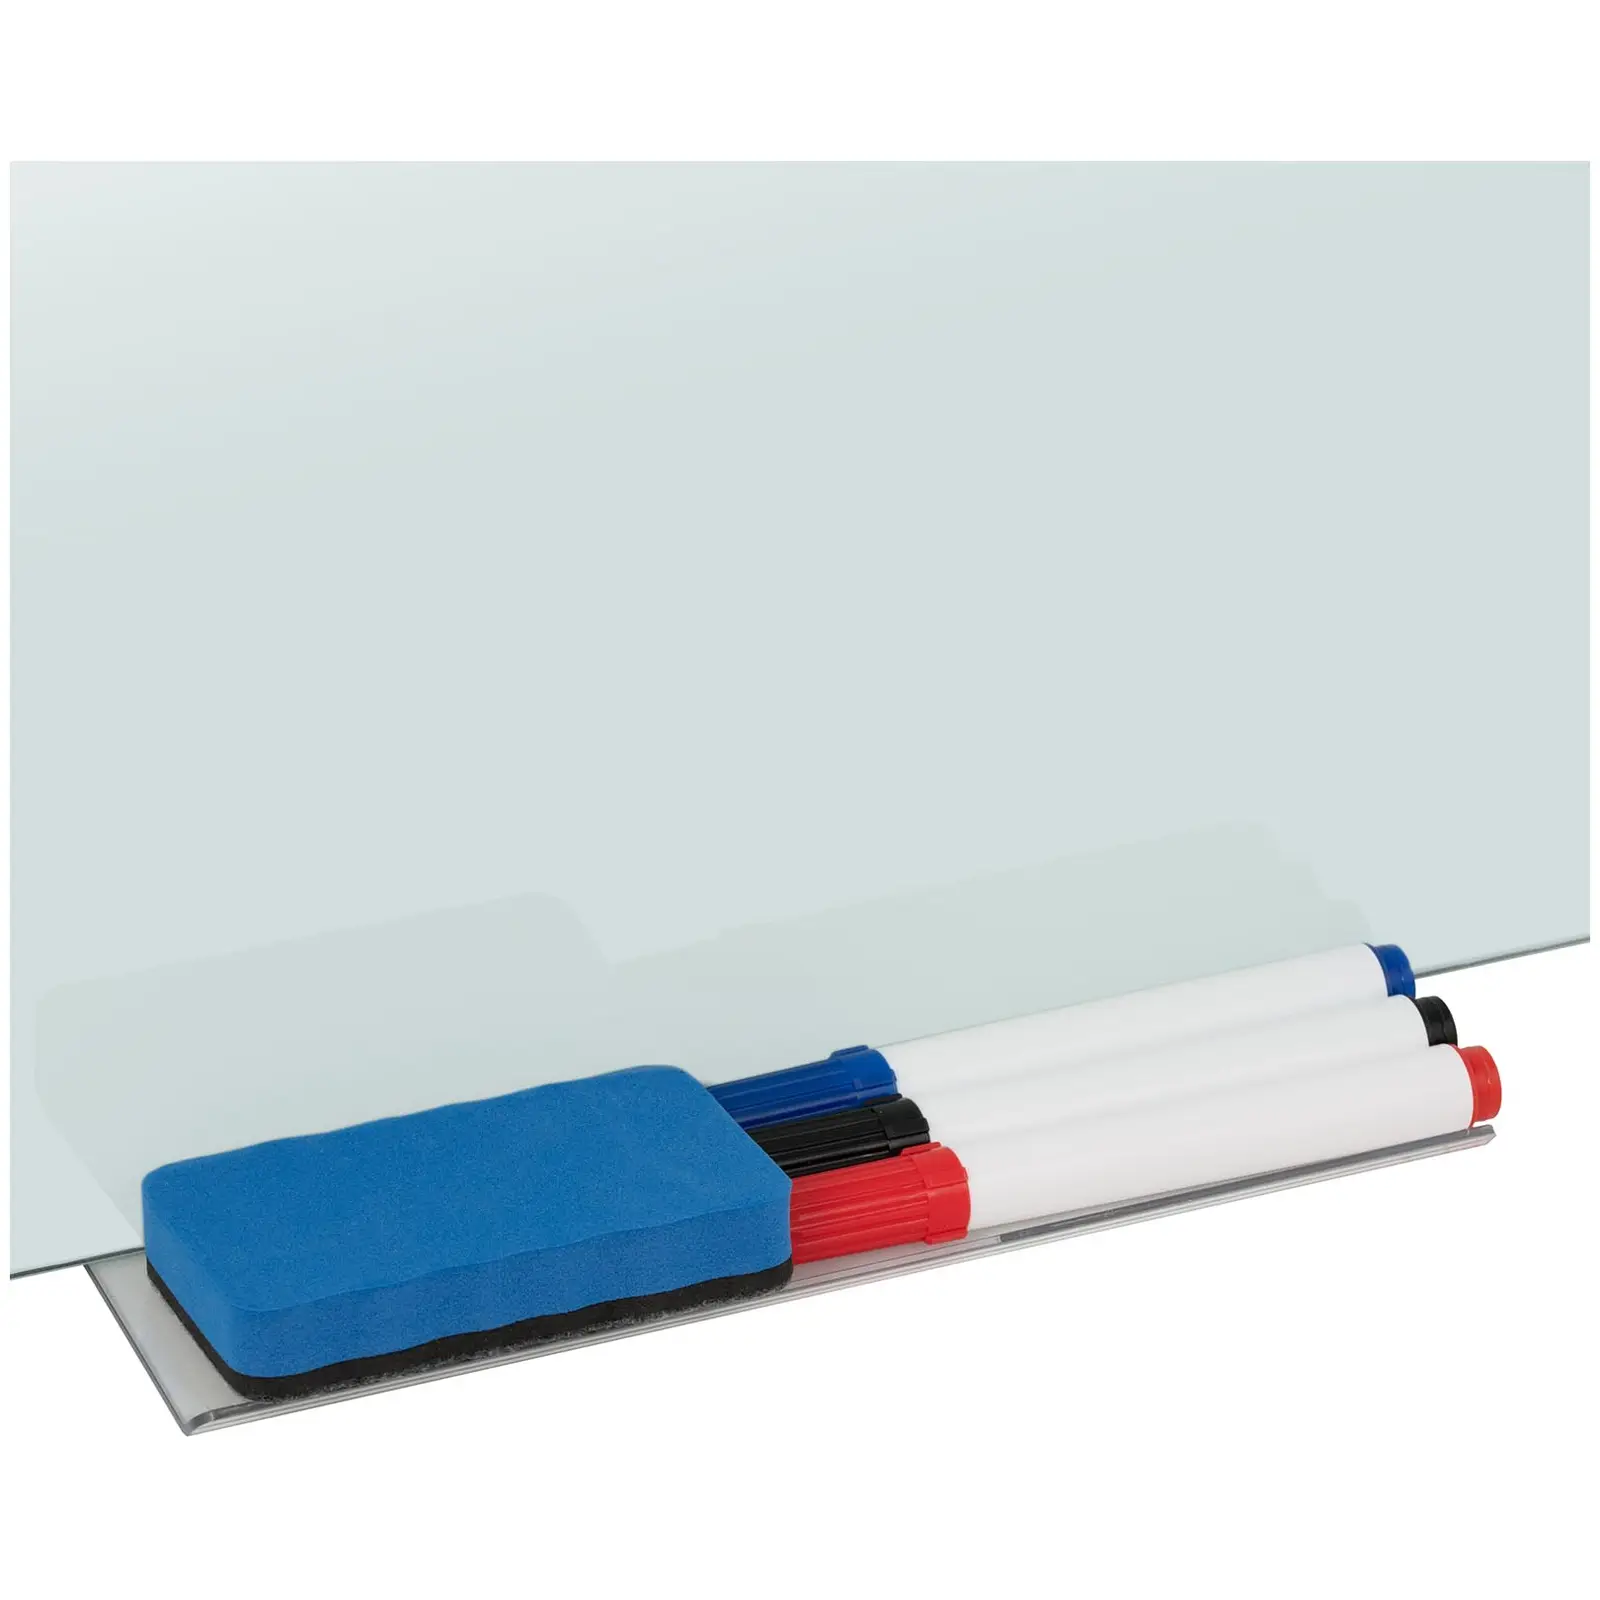 Whiteboard - 60 x 90 x 0.4 - magnetic